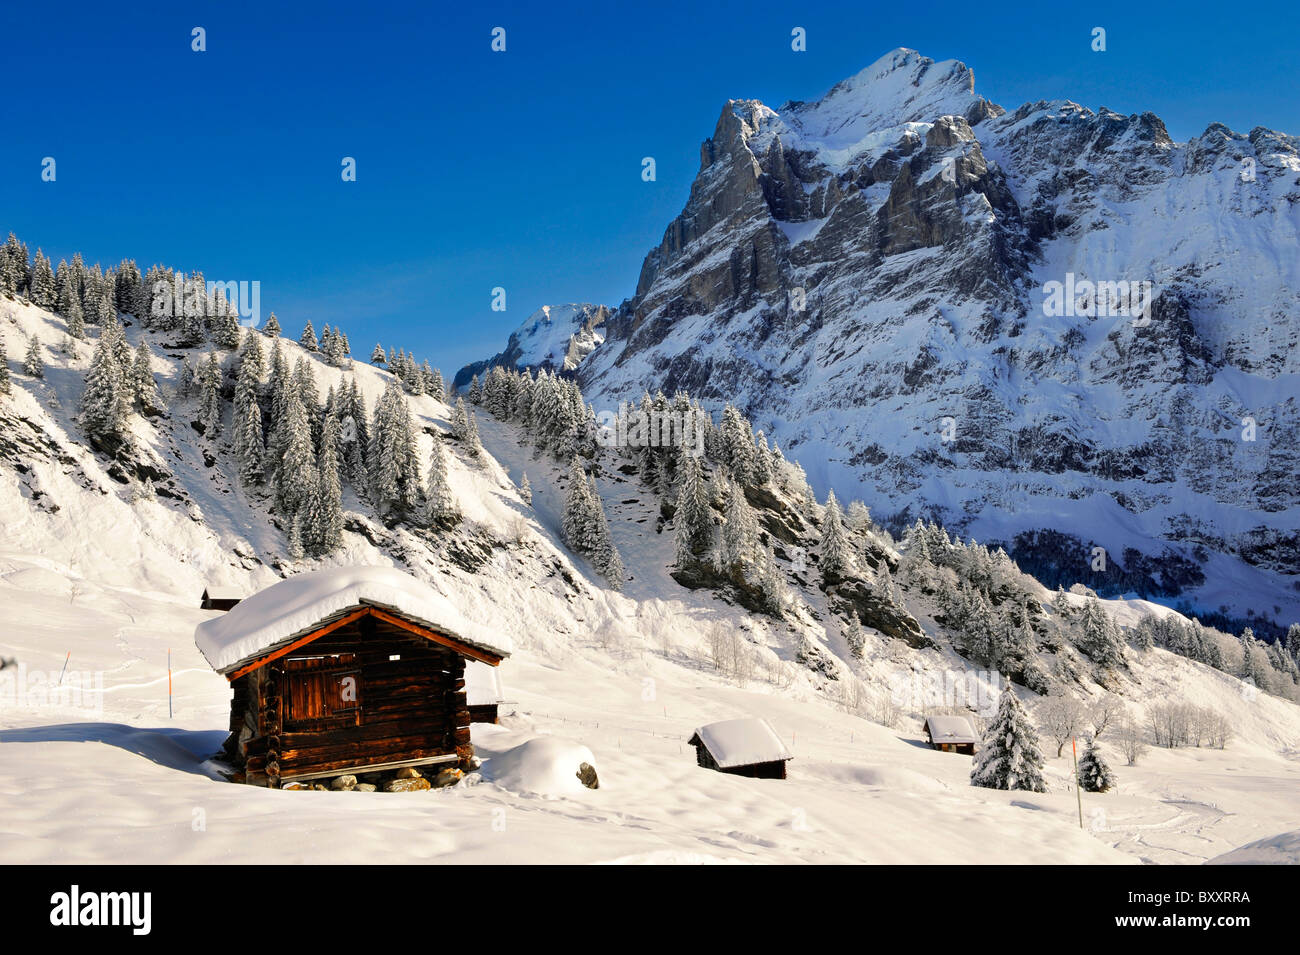 Mountain chalet in winter looking towards the wetterhorn mountain. Grindelwald, Swiss Alps Stock Photo